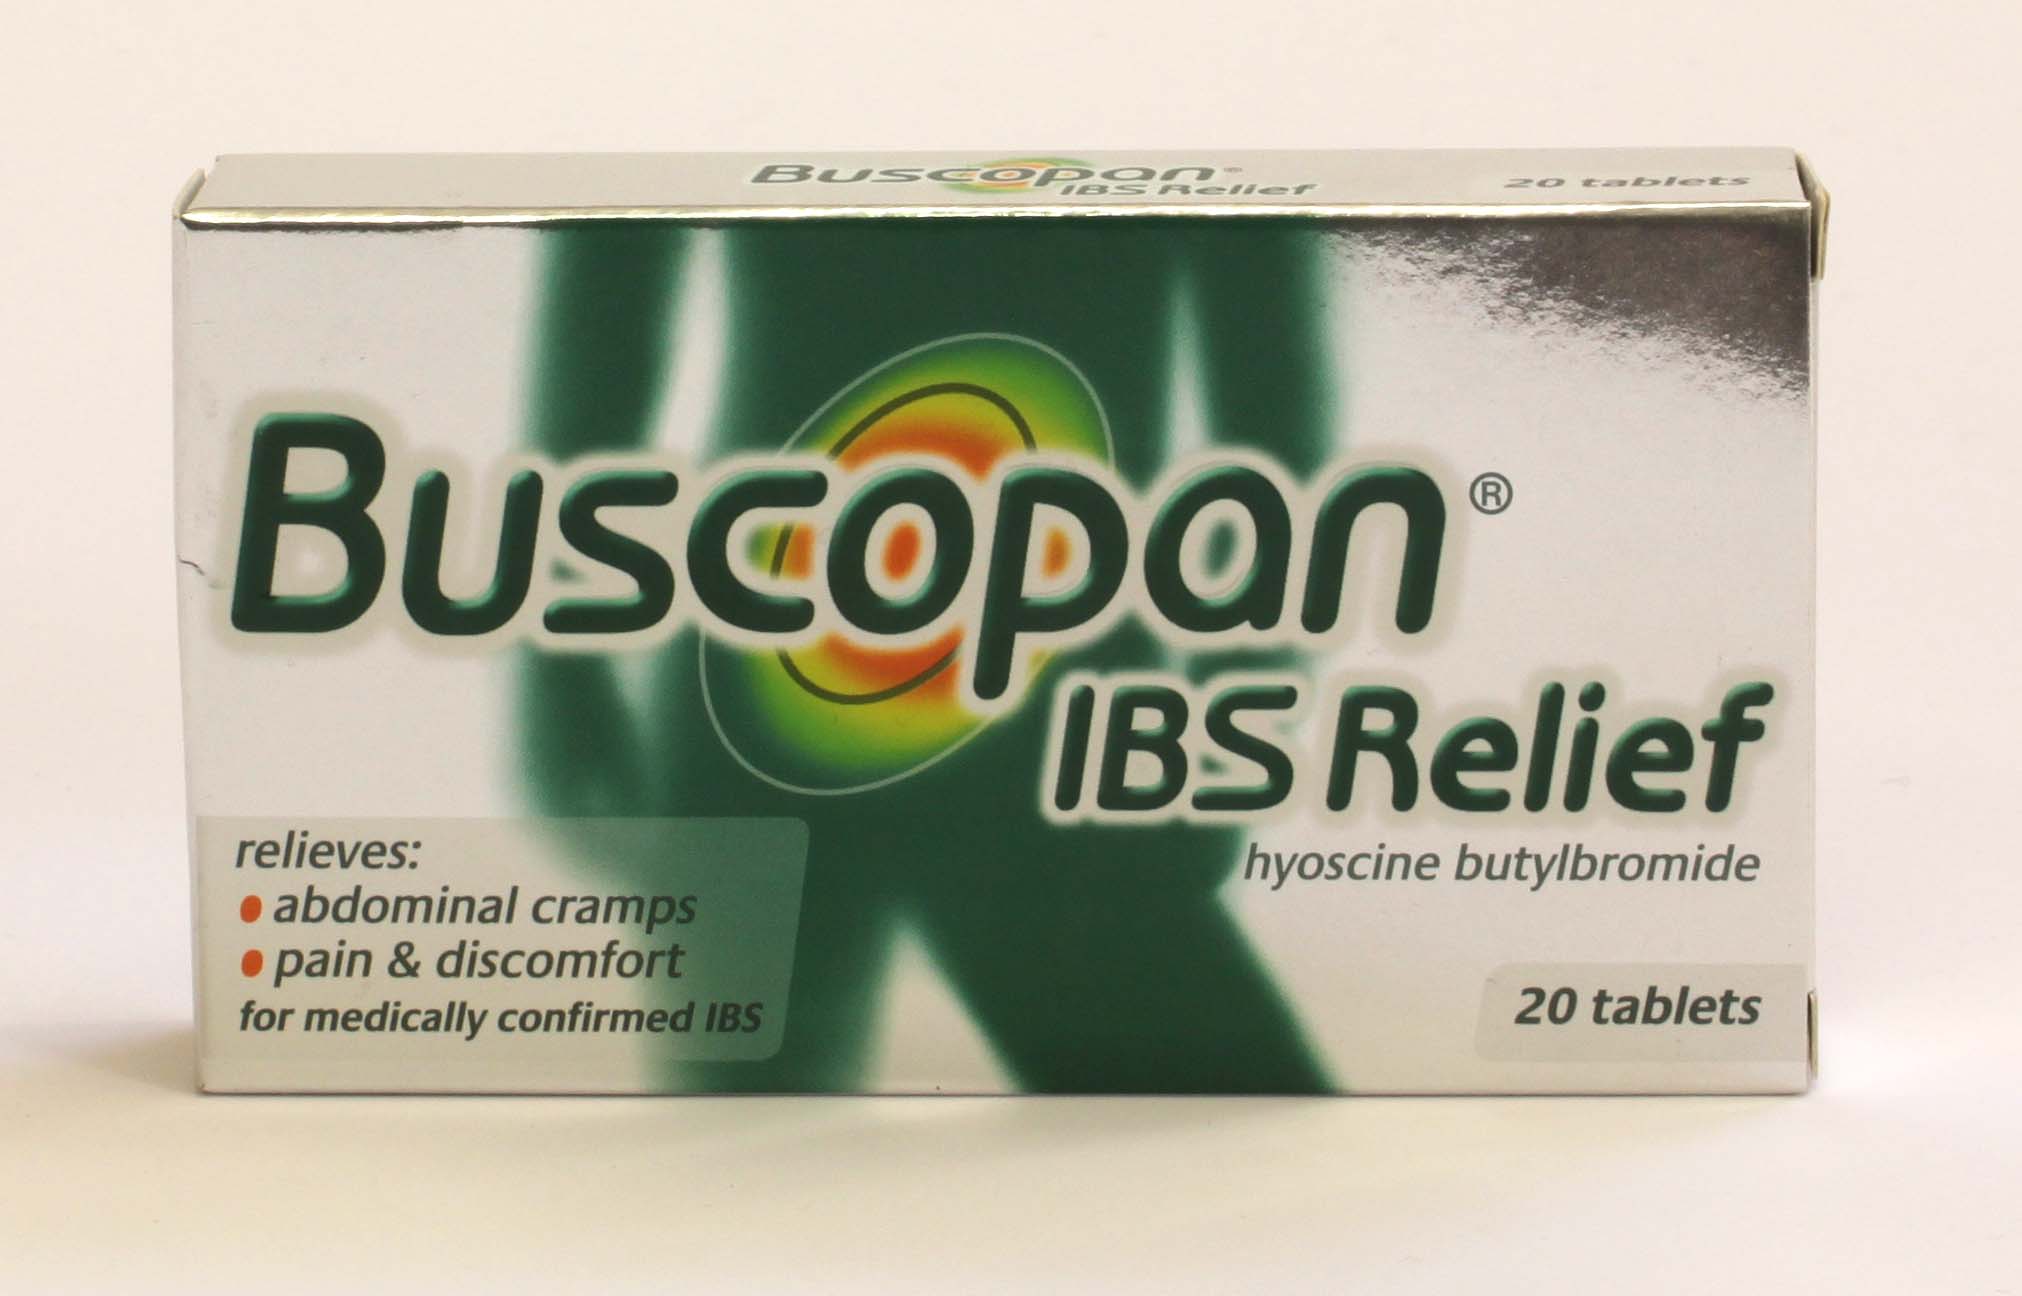 Buscopan IBS Relief. - 20 tablets